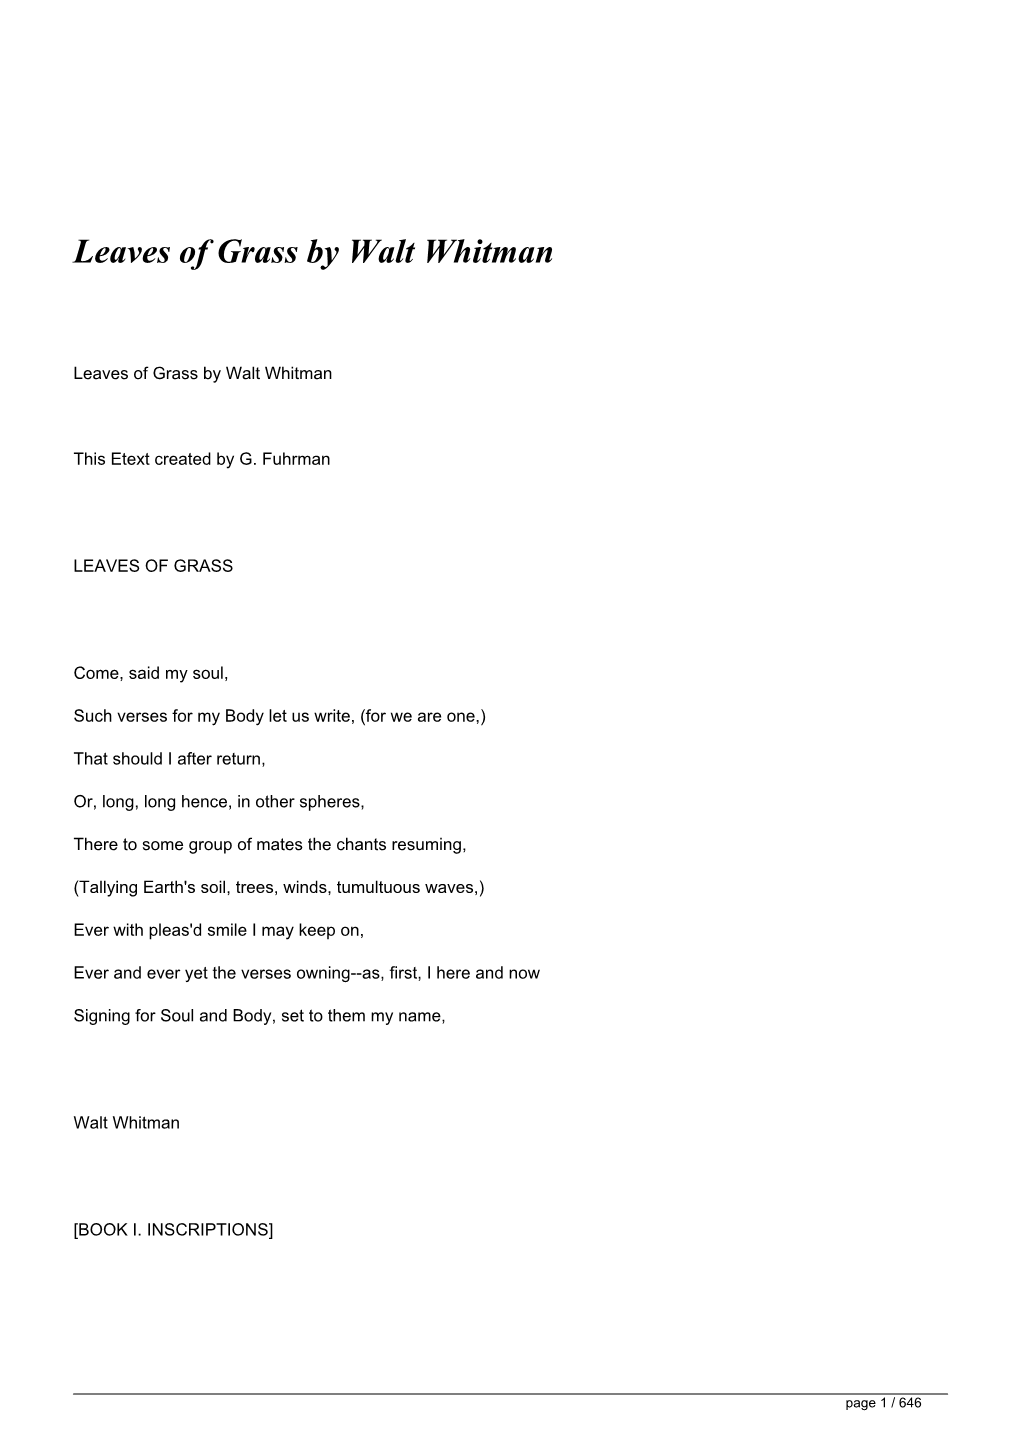 Leaves of Grass by Walt Whitman&lt;/H1&gt;